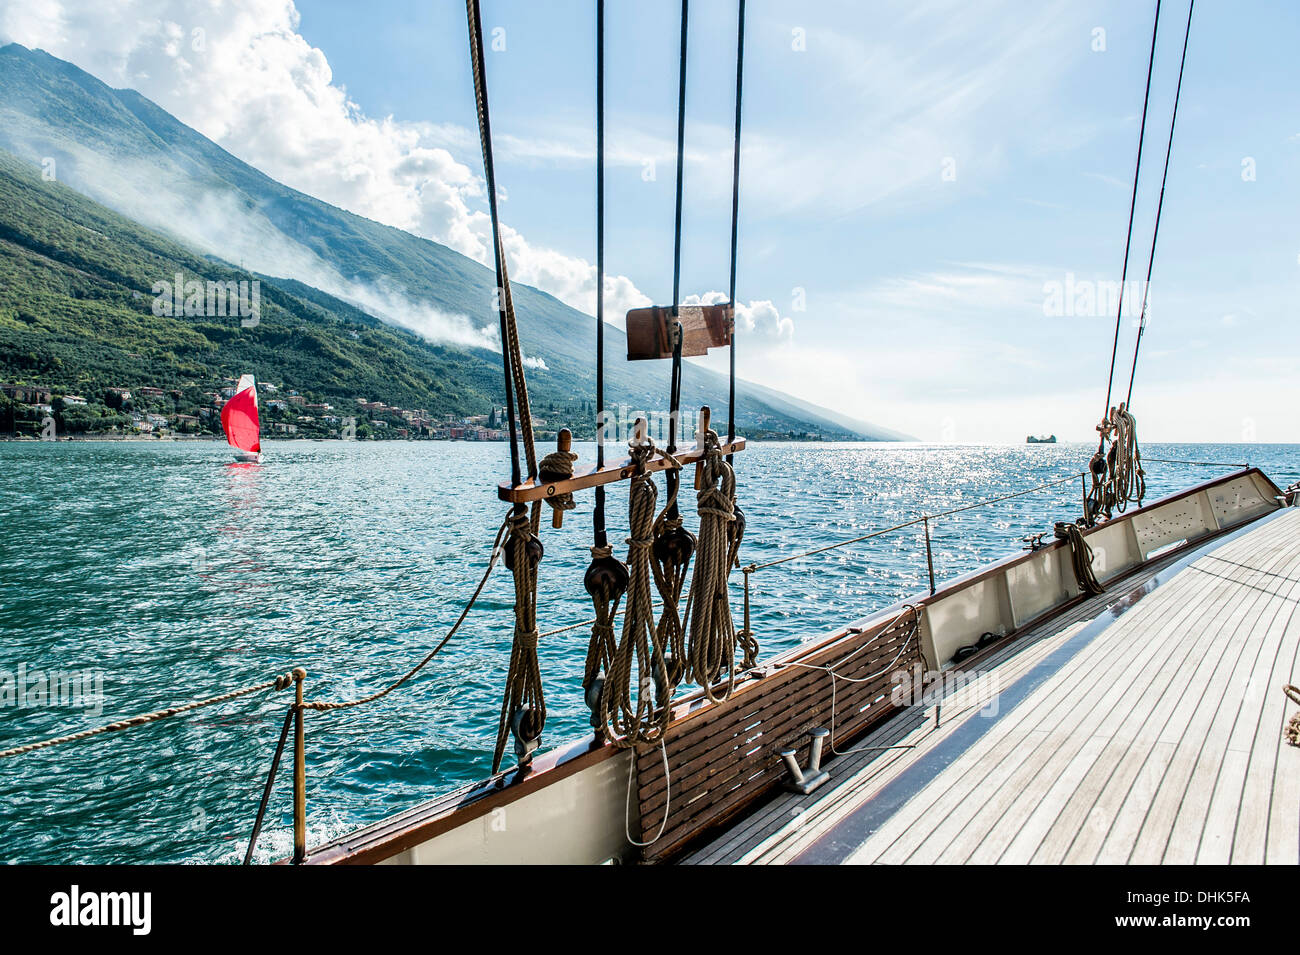 Sailing ship on lake Garda near Malcesine, Lago di Garda, Province of Verona, Northern Italy, Italy Stock Photo